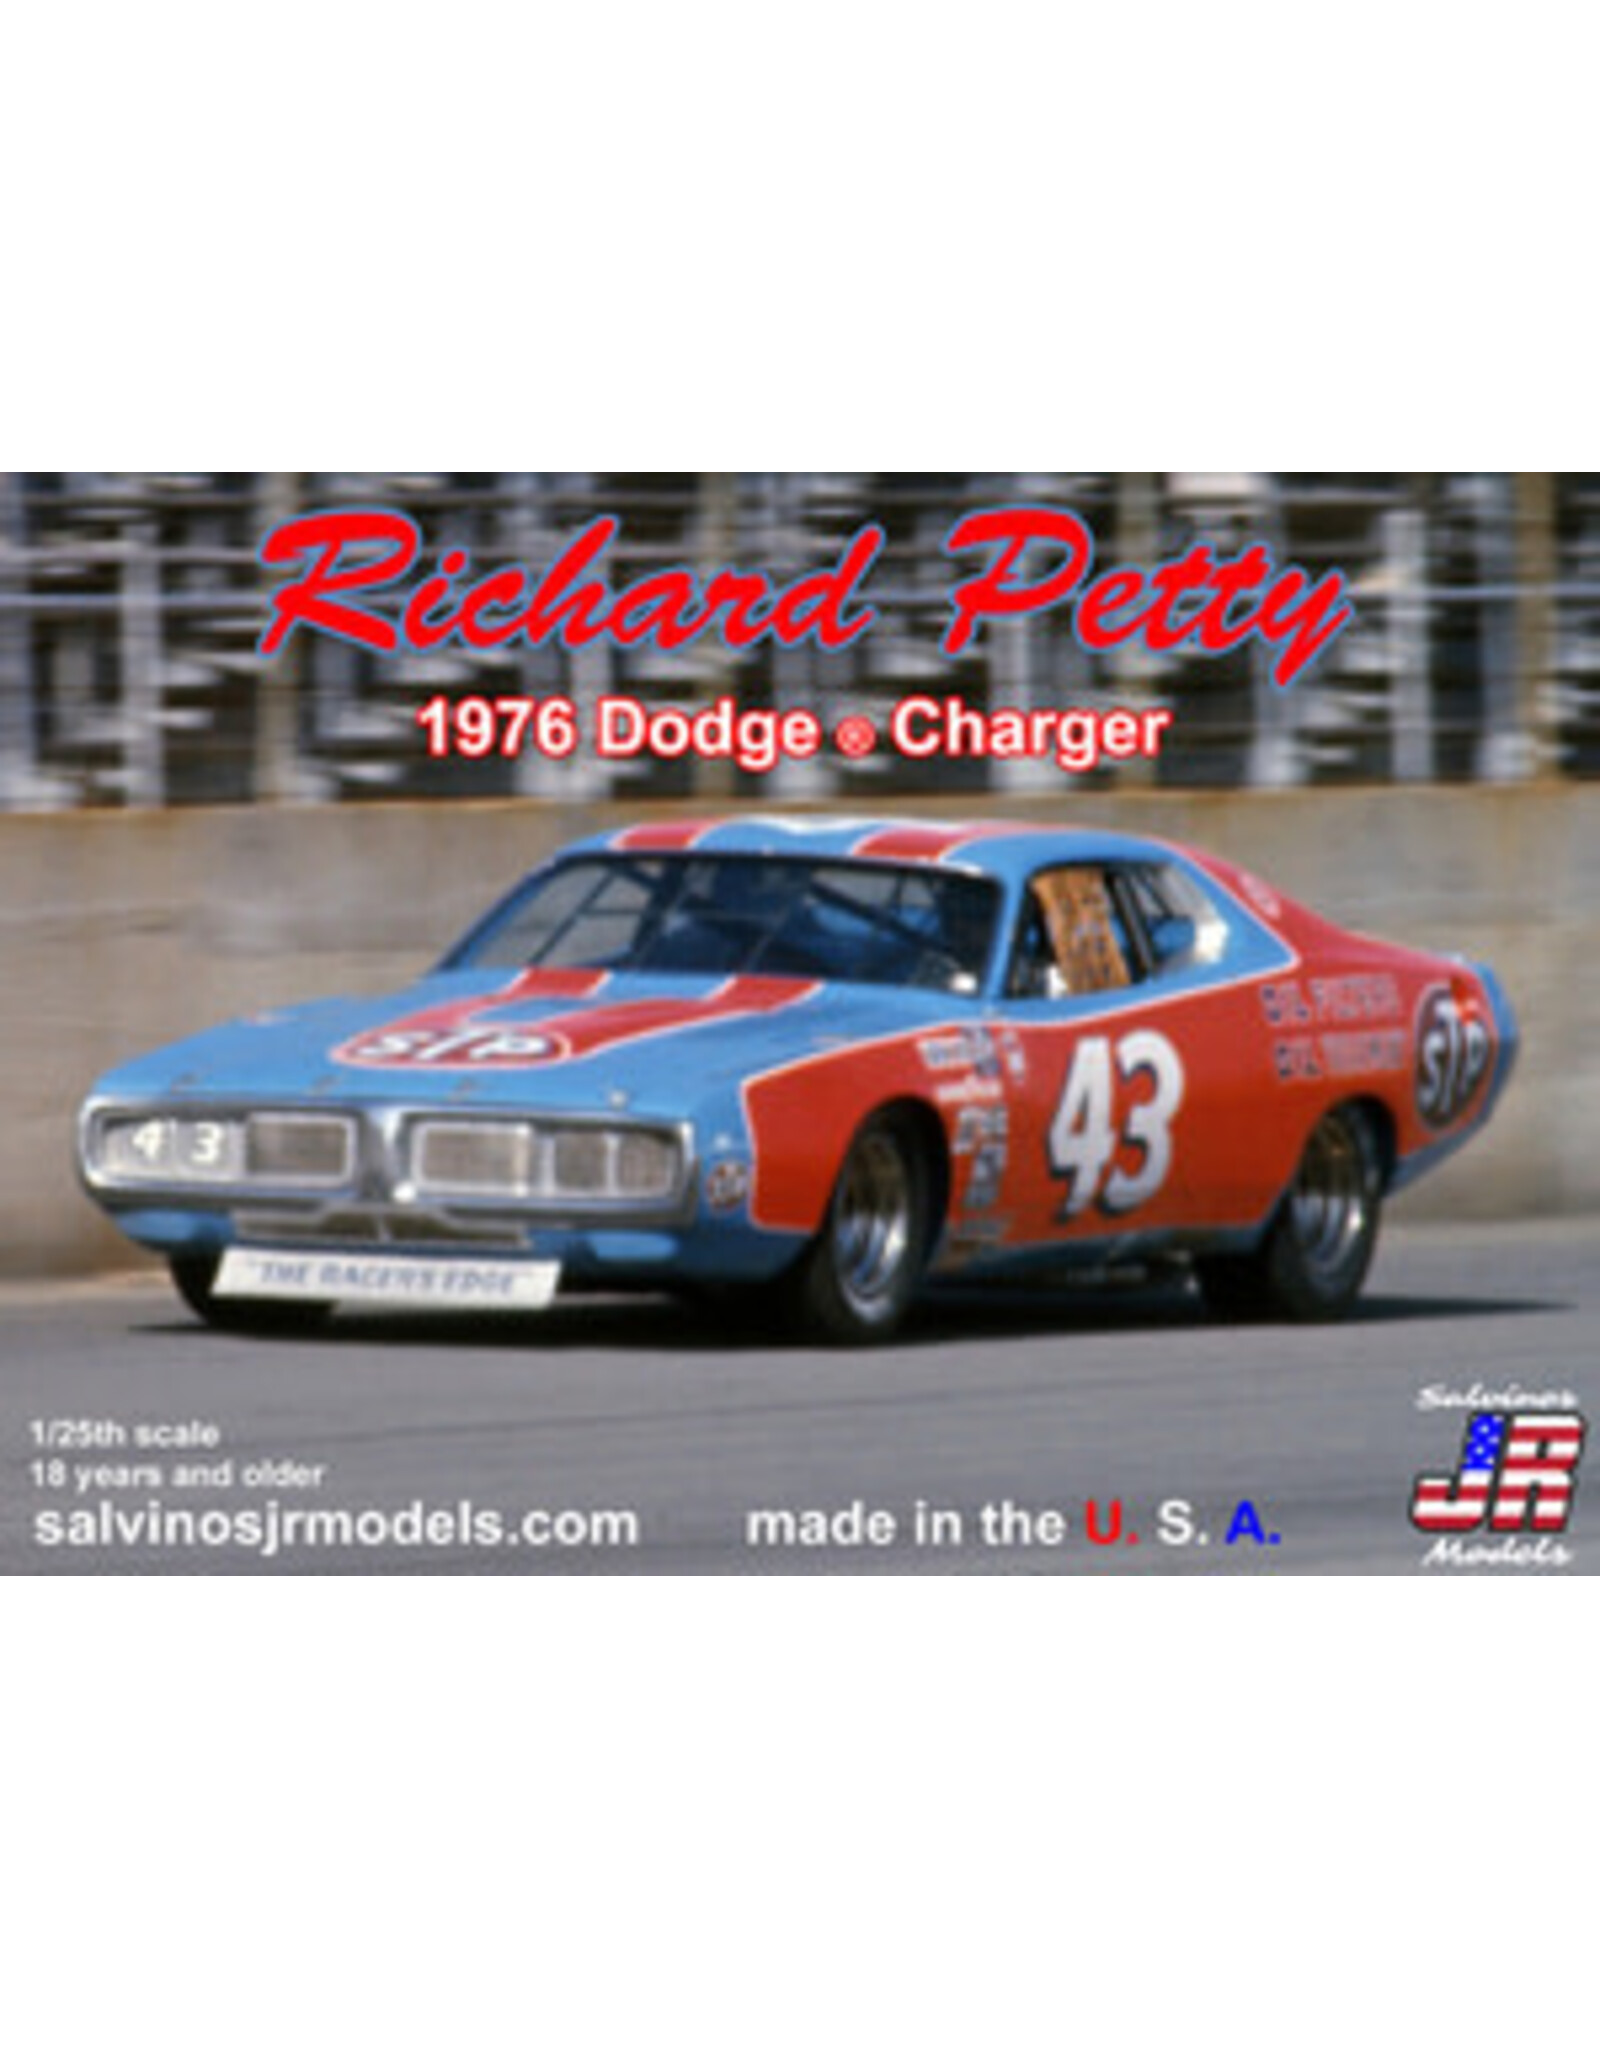 Salvinos JR 1/24 Richard Petty 1976 Dodge Charger Plastic Model Car Kit w/Water Slide Decals